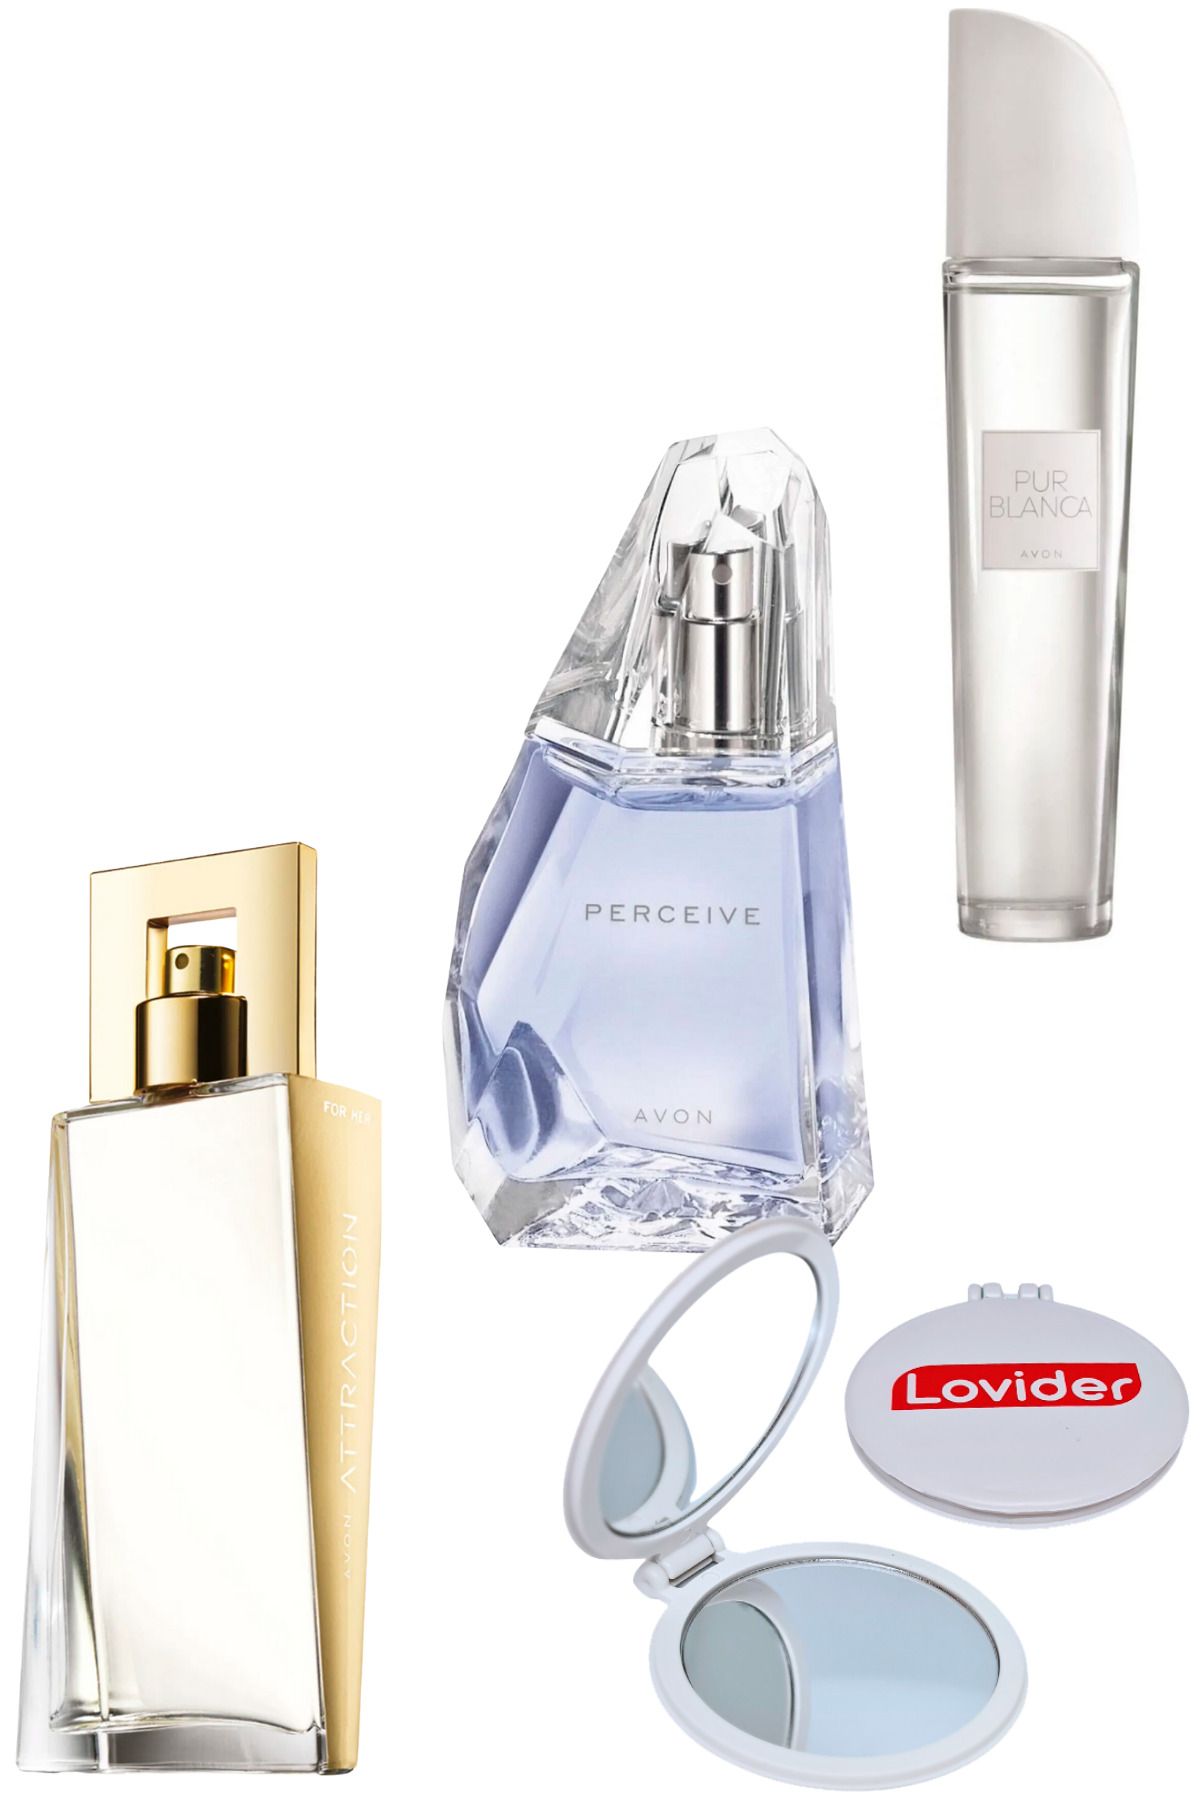 Avon Attraction EDP + Perceive EDP + Pur Blanca EDT 50ml Kadın Parfüm 3'lü Set + Lovider Cep Aynası